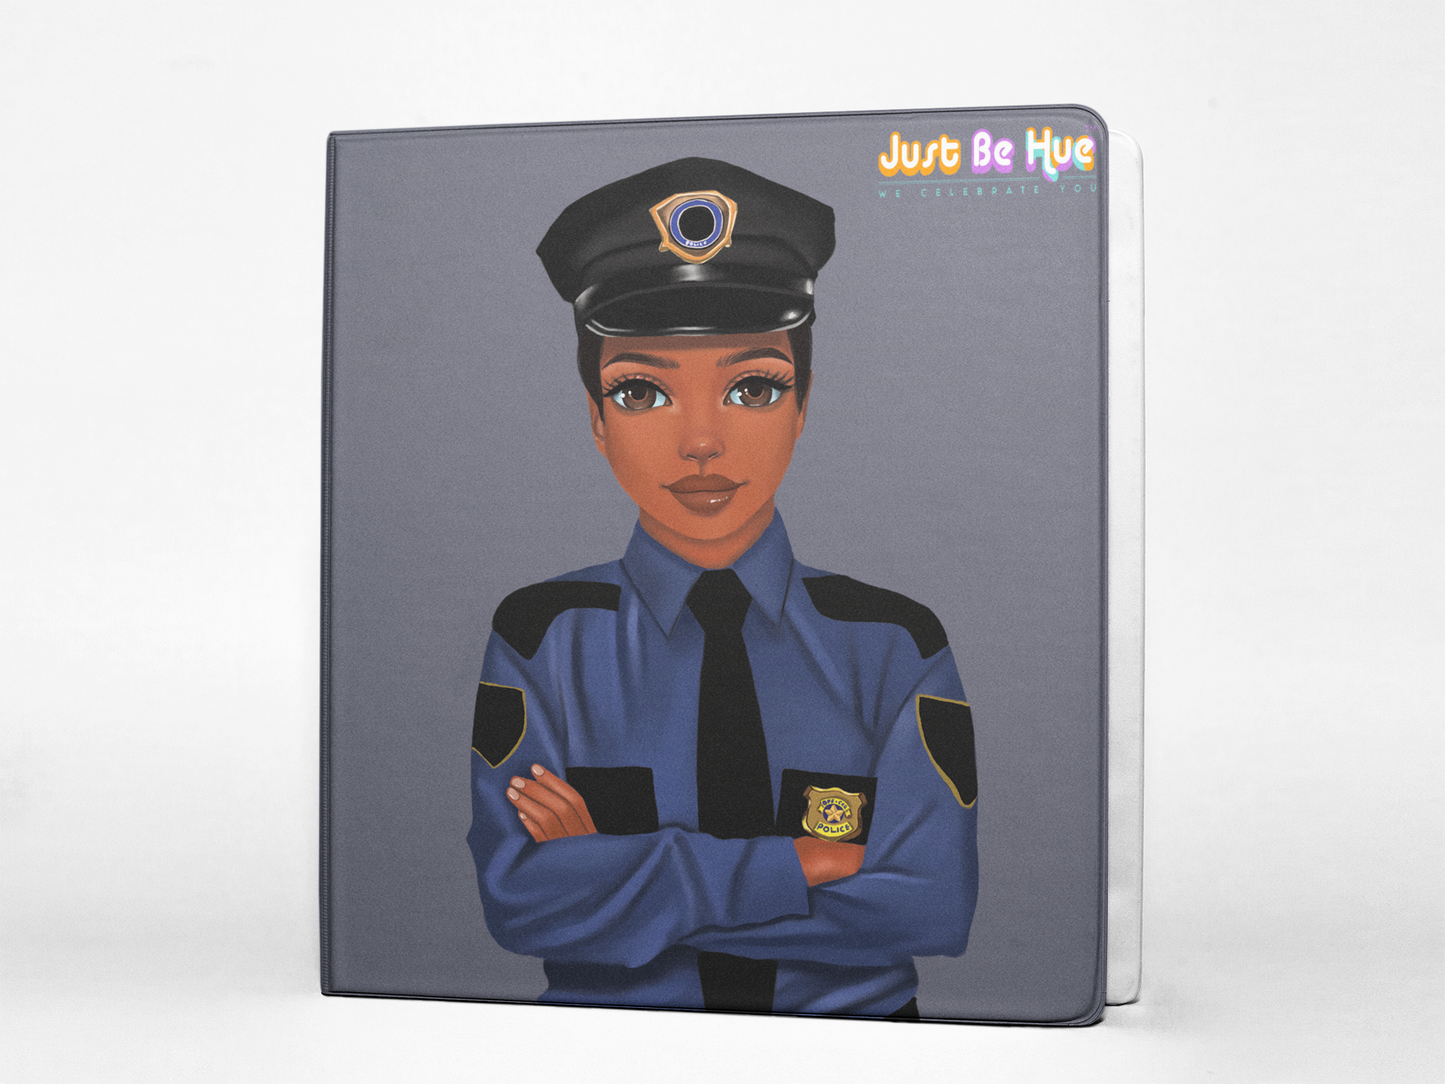 Patrice The Policewoman